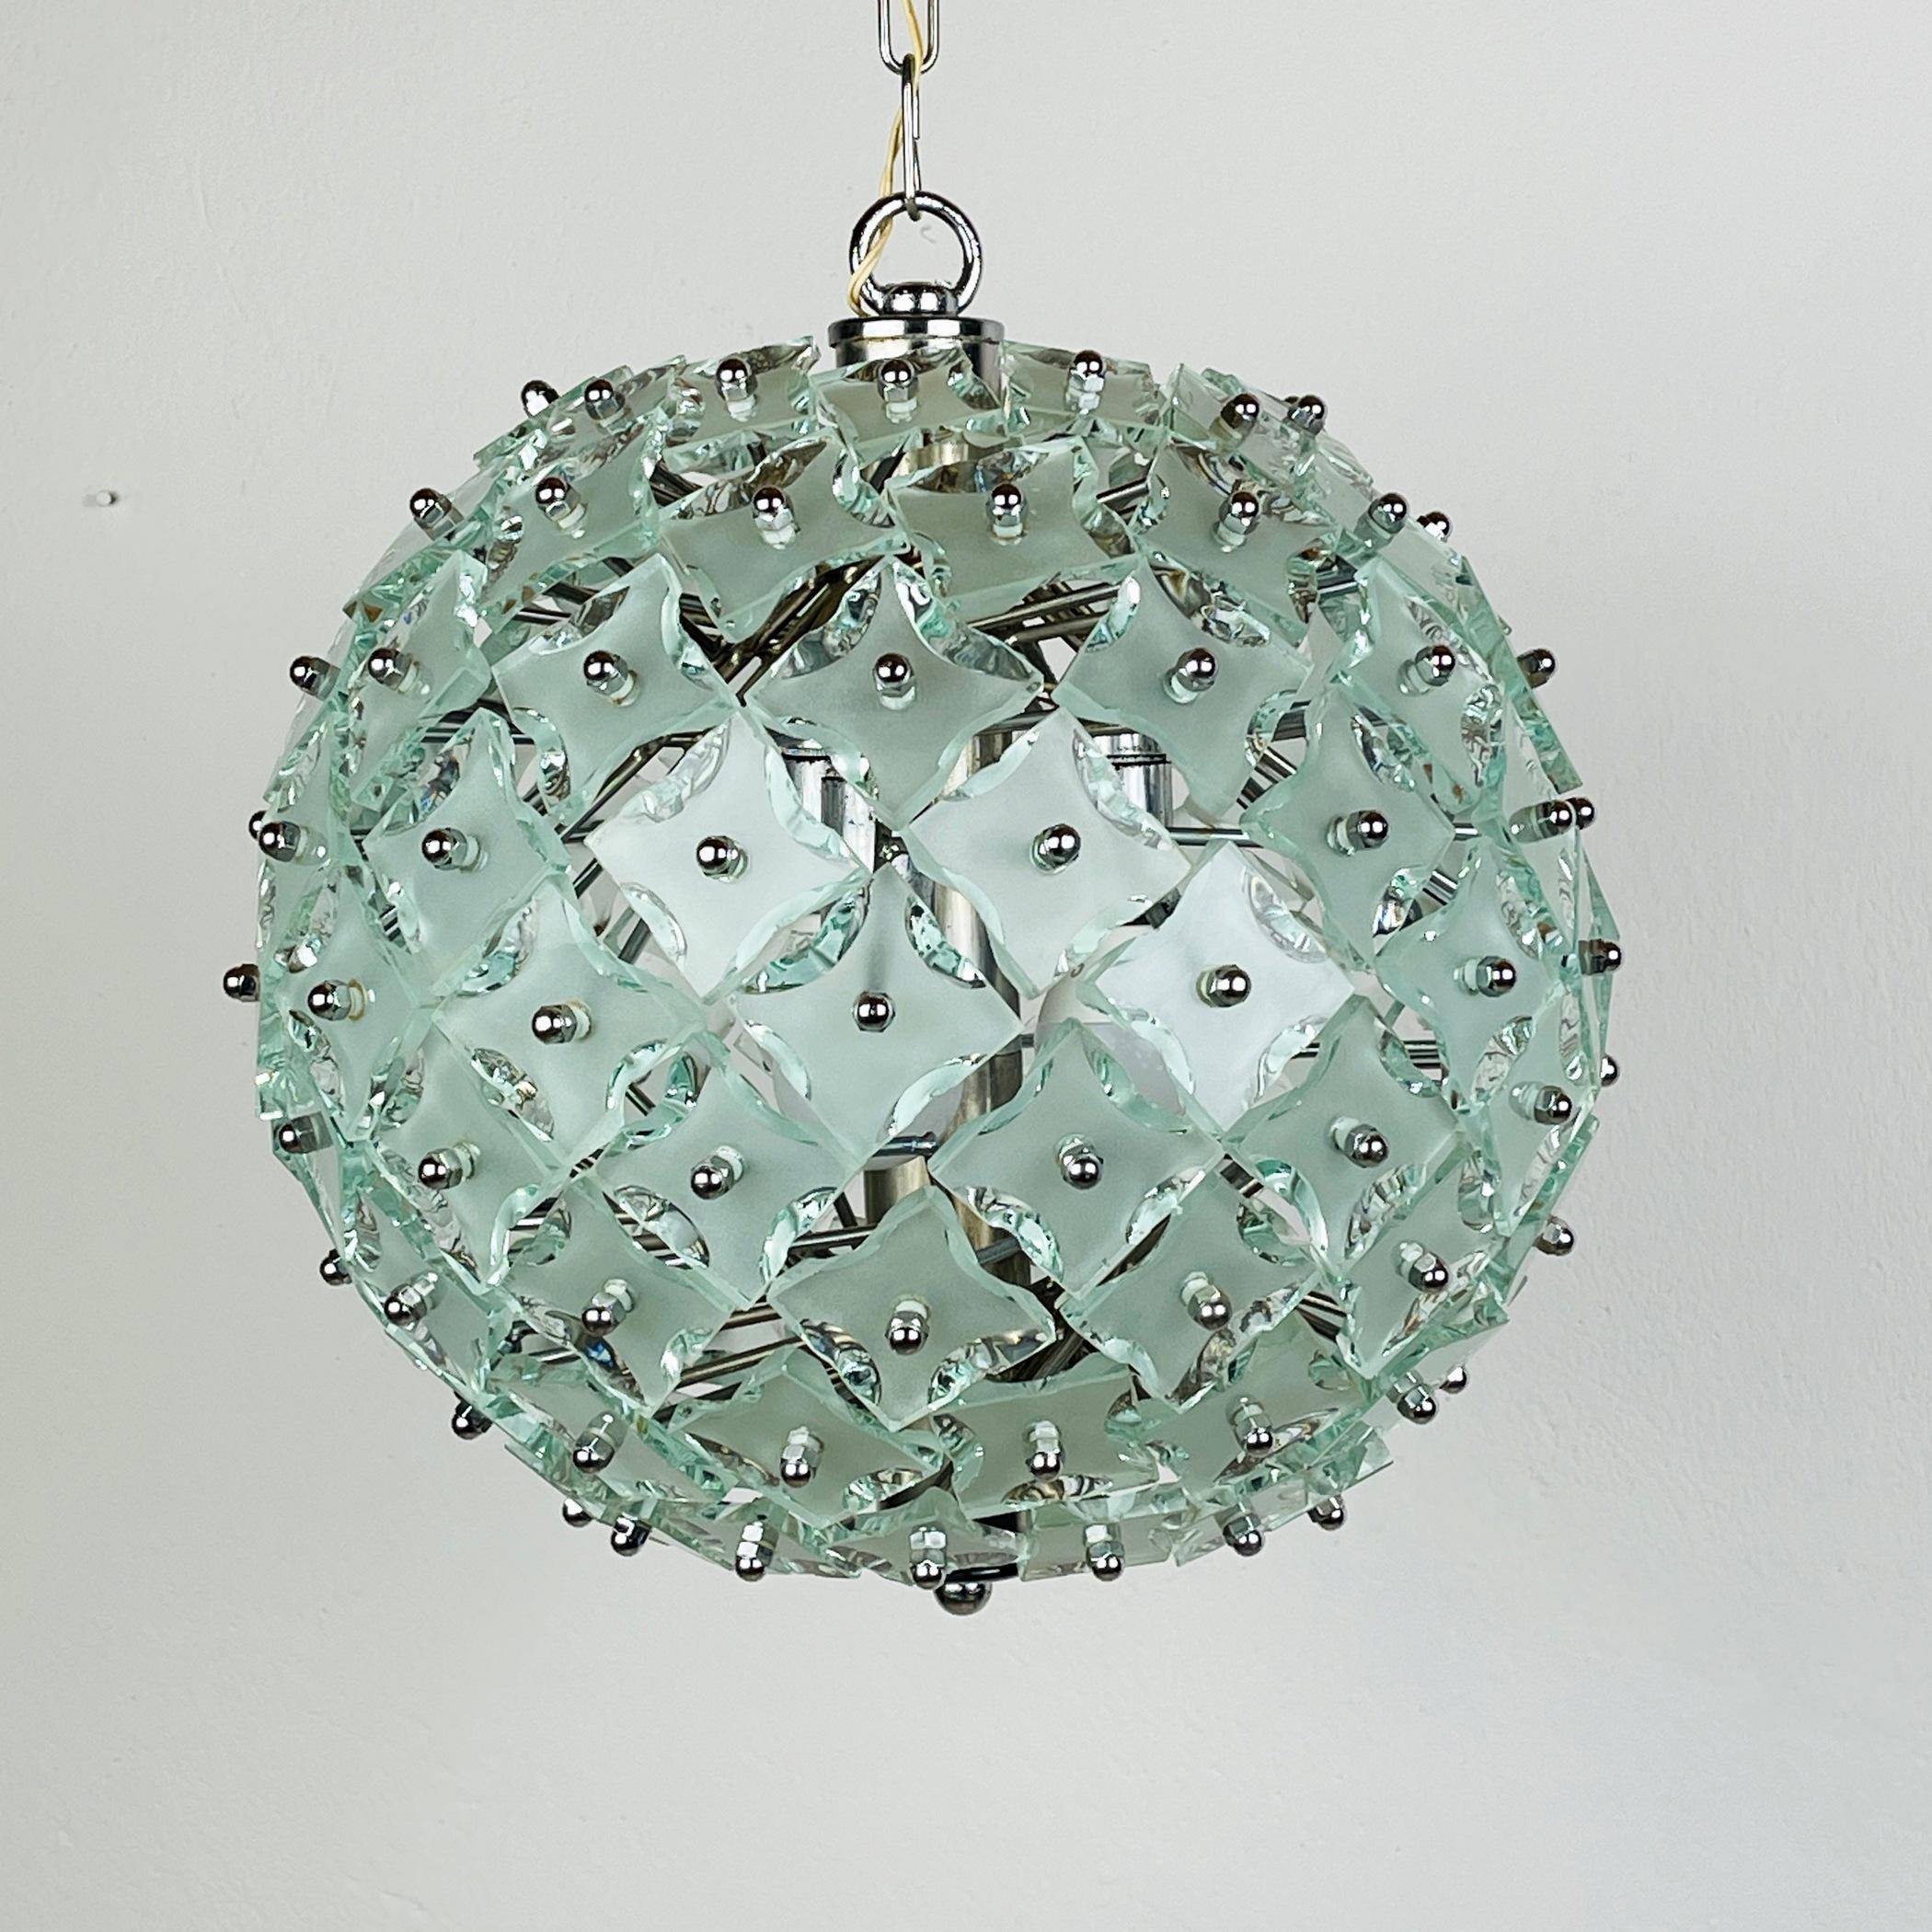 Art glass pendant lamp Sputnik by Fontana Arte Italy 1960s For Sale 2